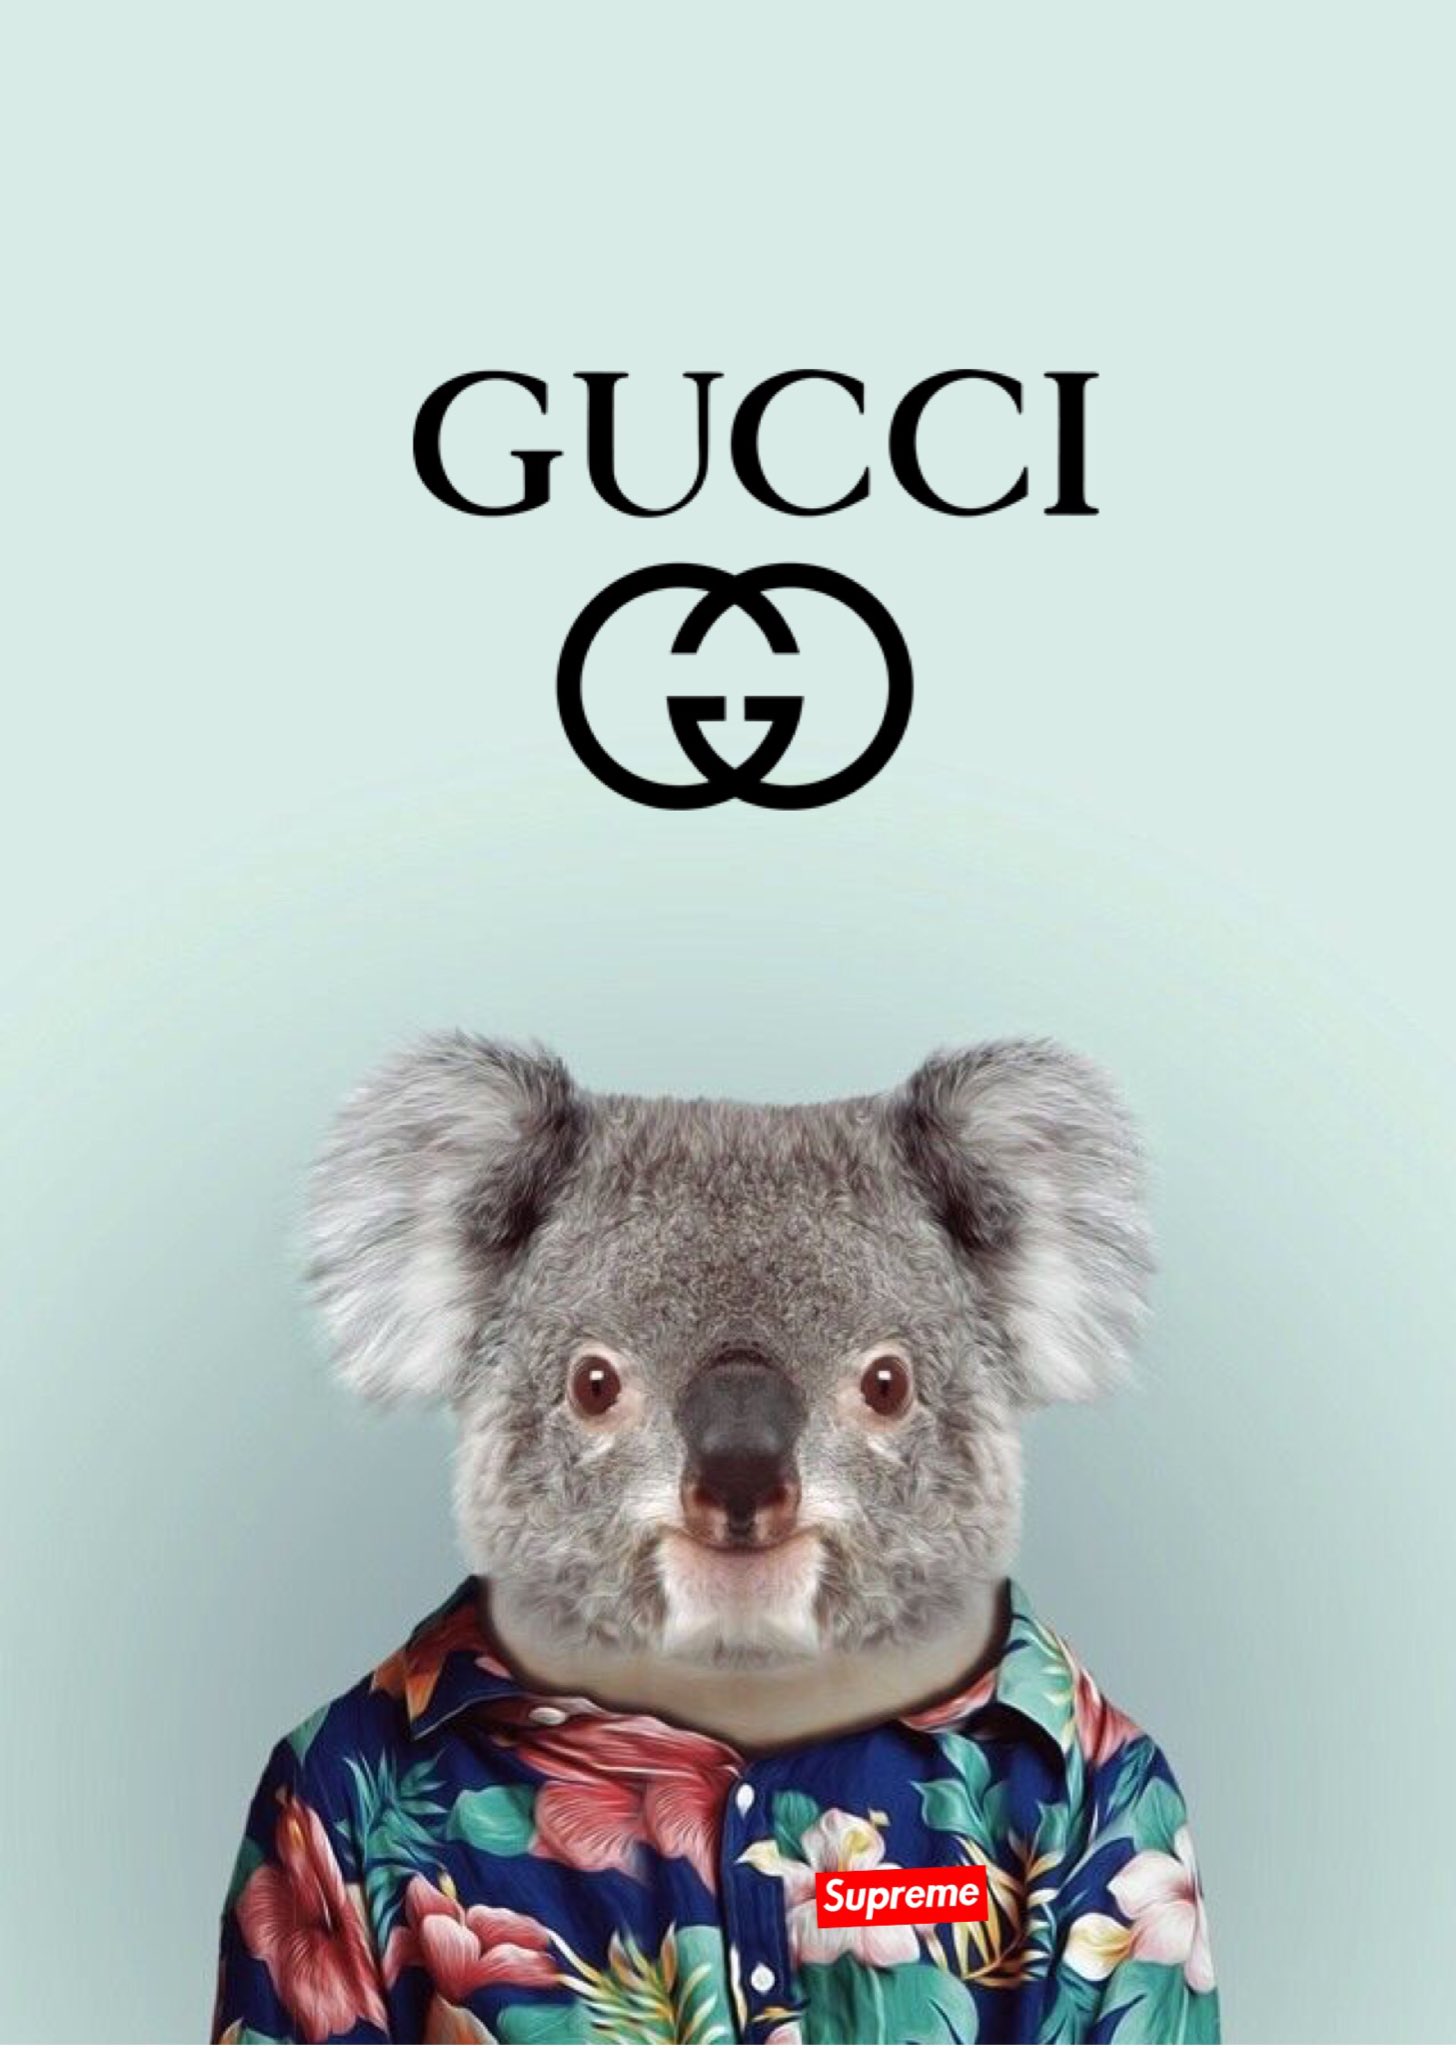 iphone wallpaper on Twitter: "Gucci x supreme wallpaper #gucci #supreme